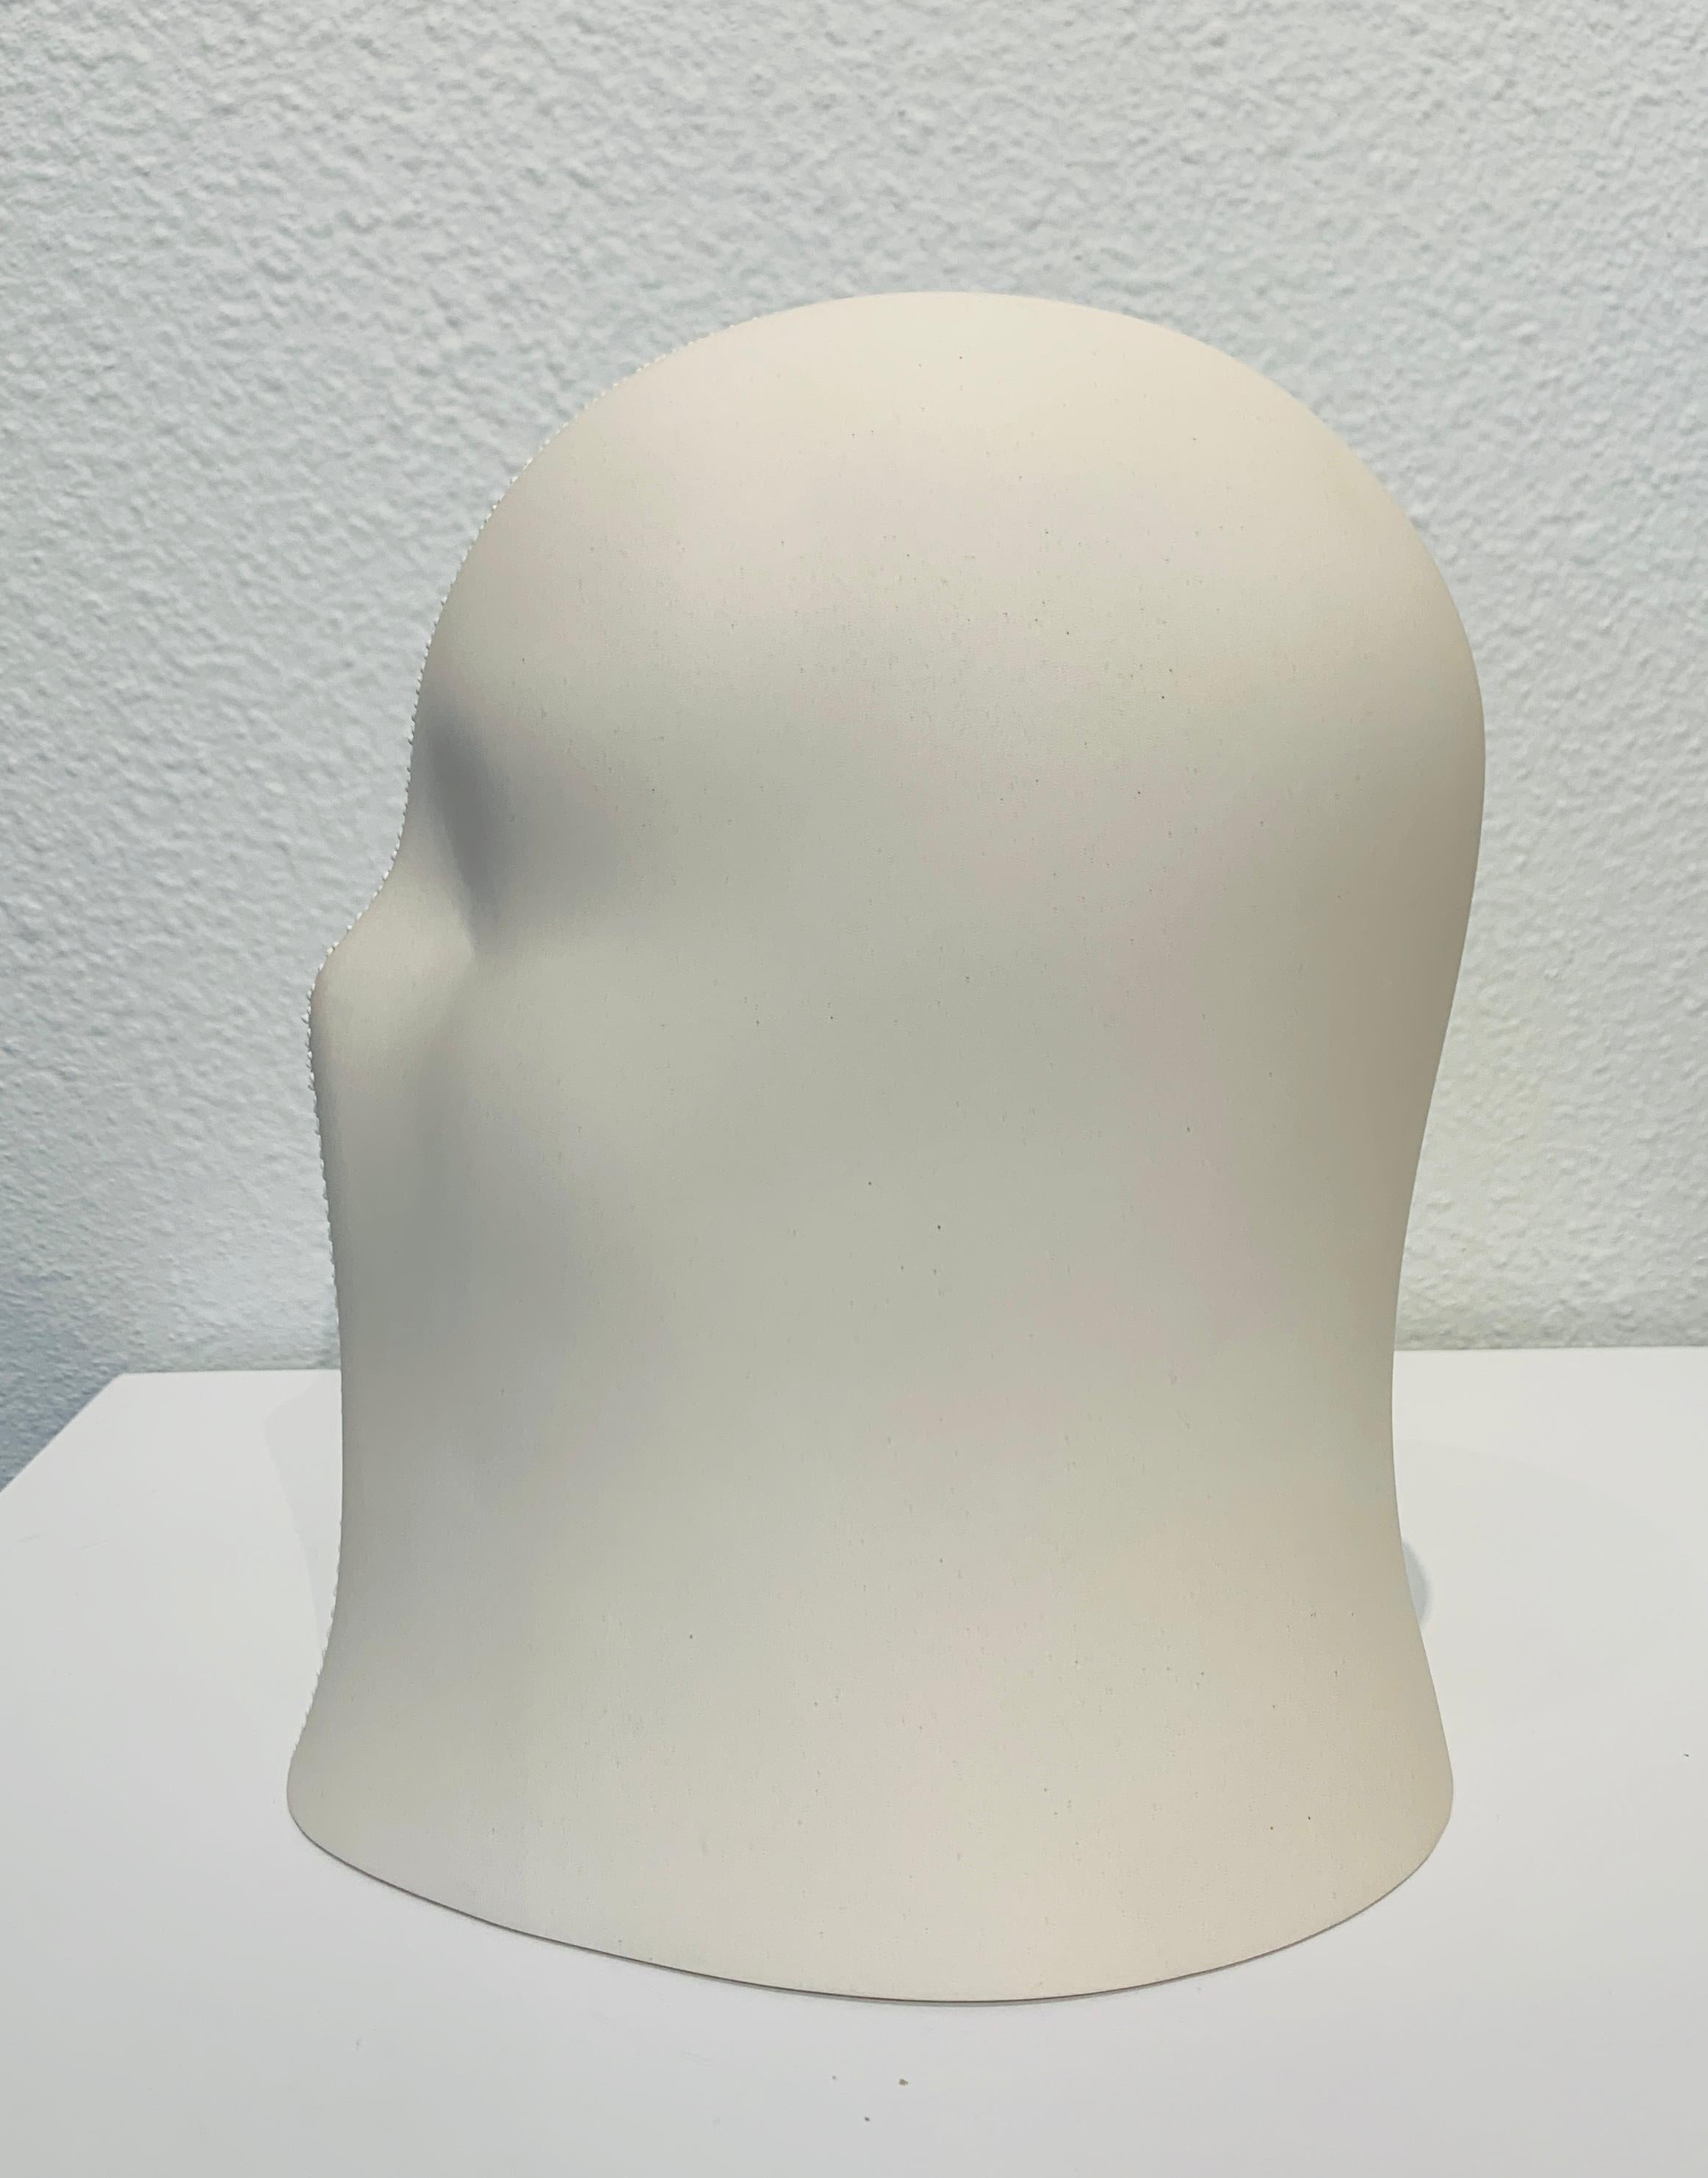 Fasten Veil, Chloe Rizzo Sculpture Porcelain Glaze White Female Bondage Zipper 2